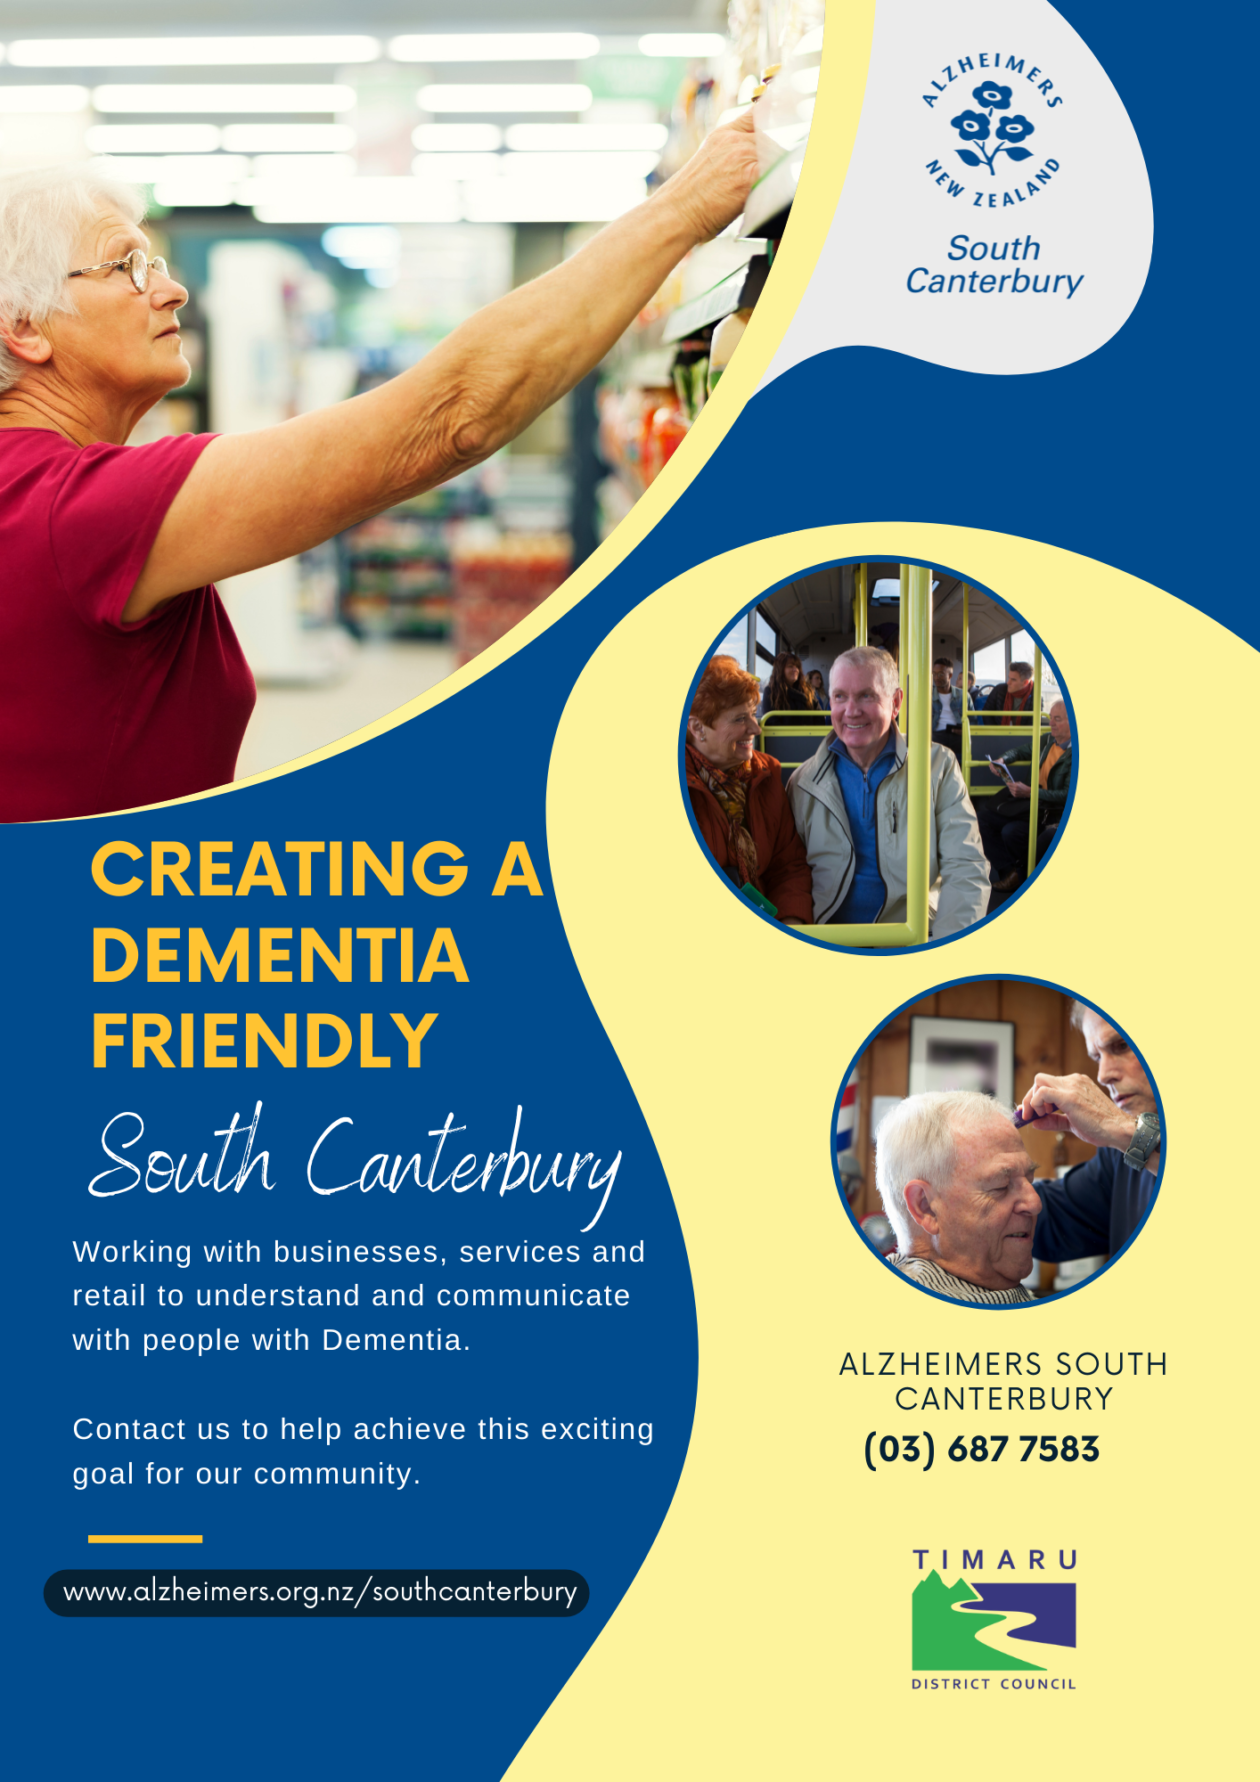 Creating a Dementia Friendly South Canterbury thumbnail image